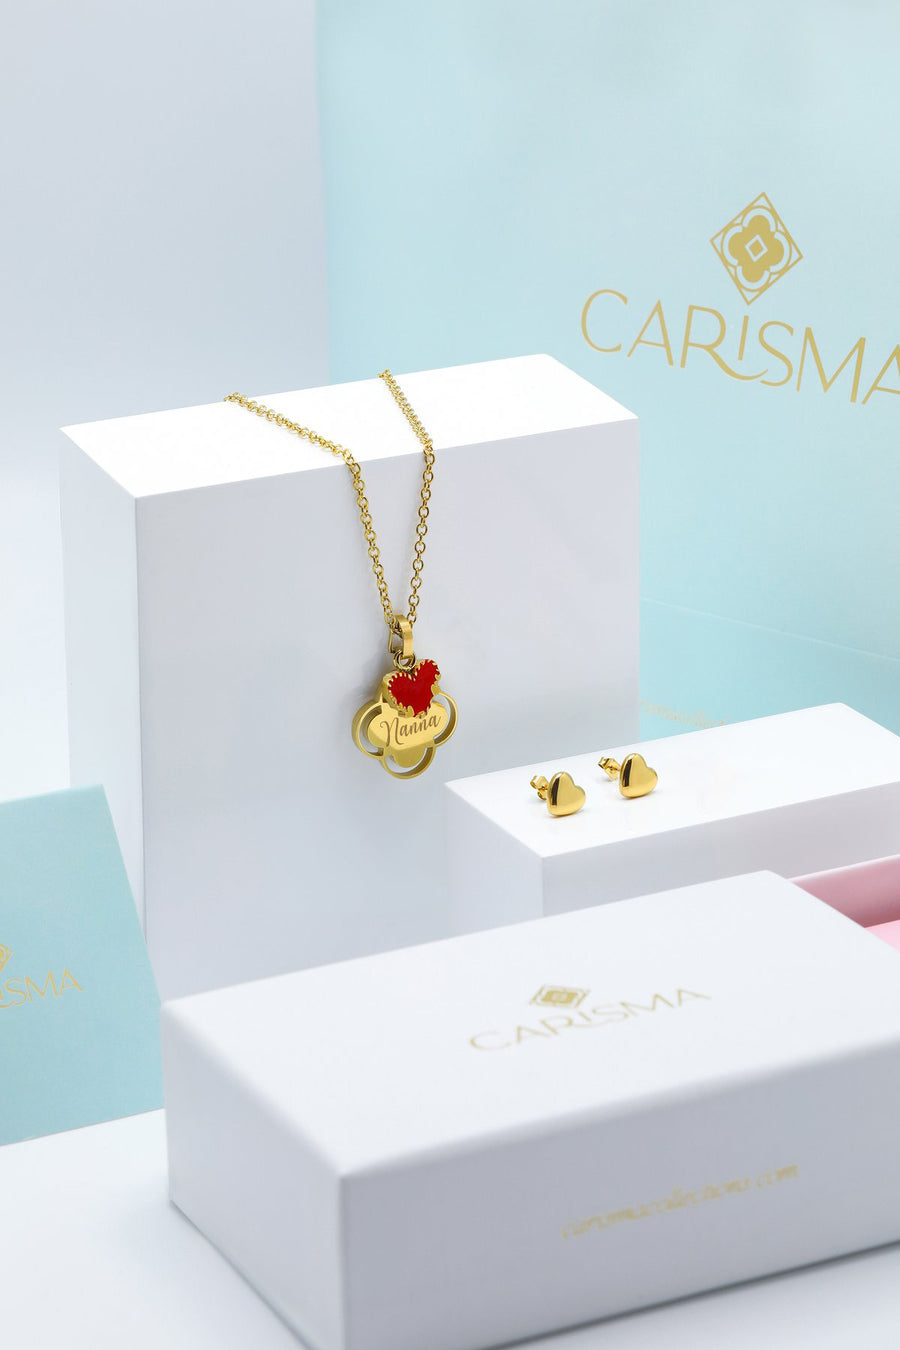 "Nanna" & "Grandma" Carisma Pendant, Qalbi Pendant & Heart of Gold Earing Gift Set